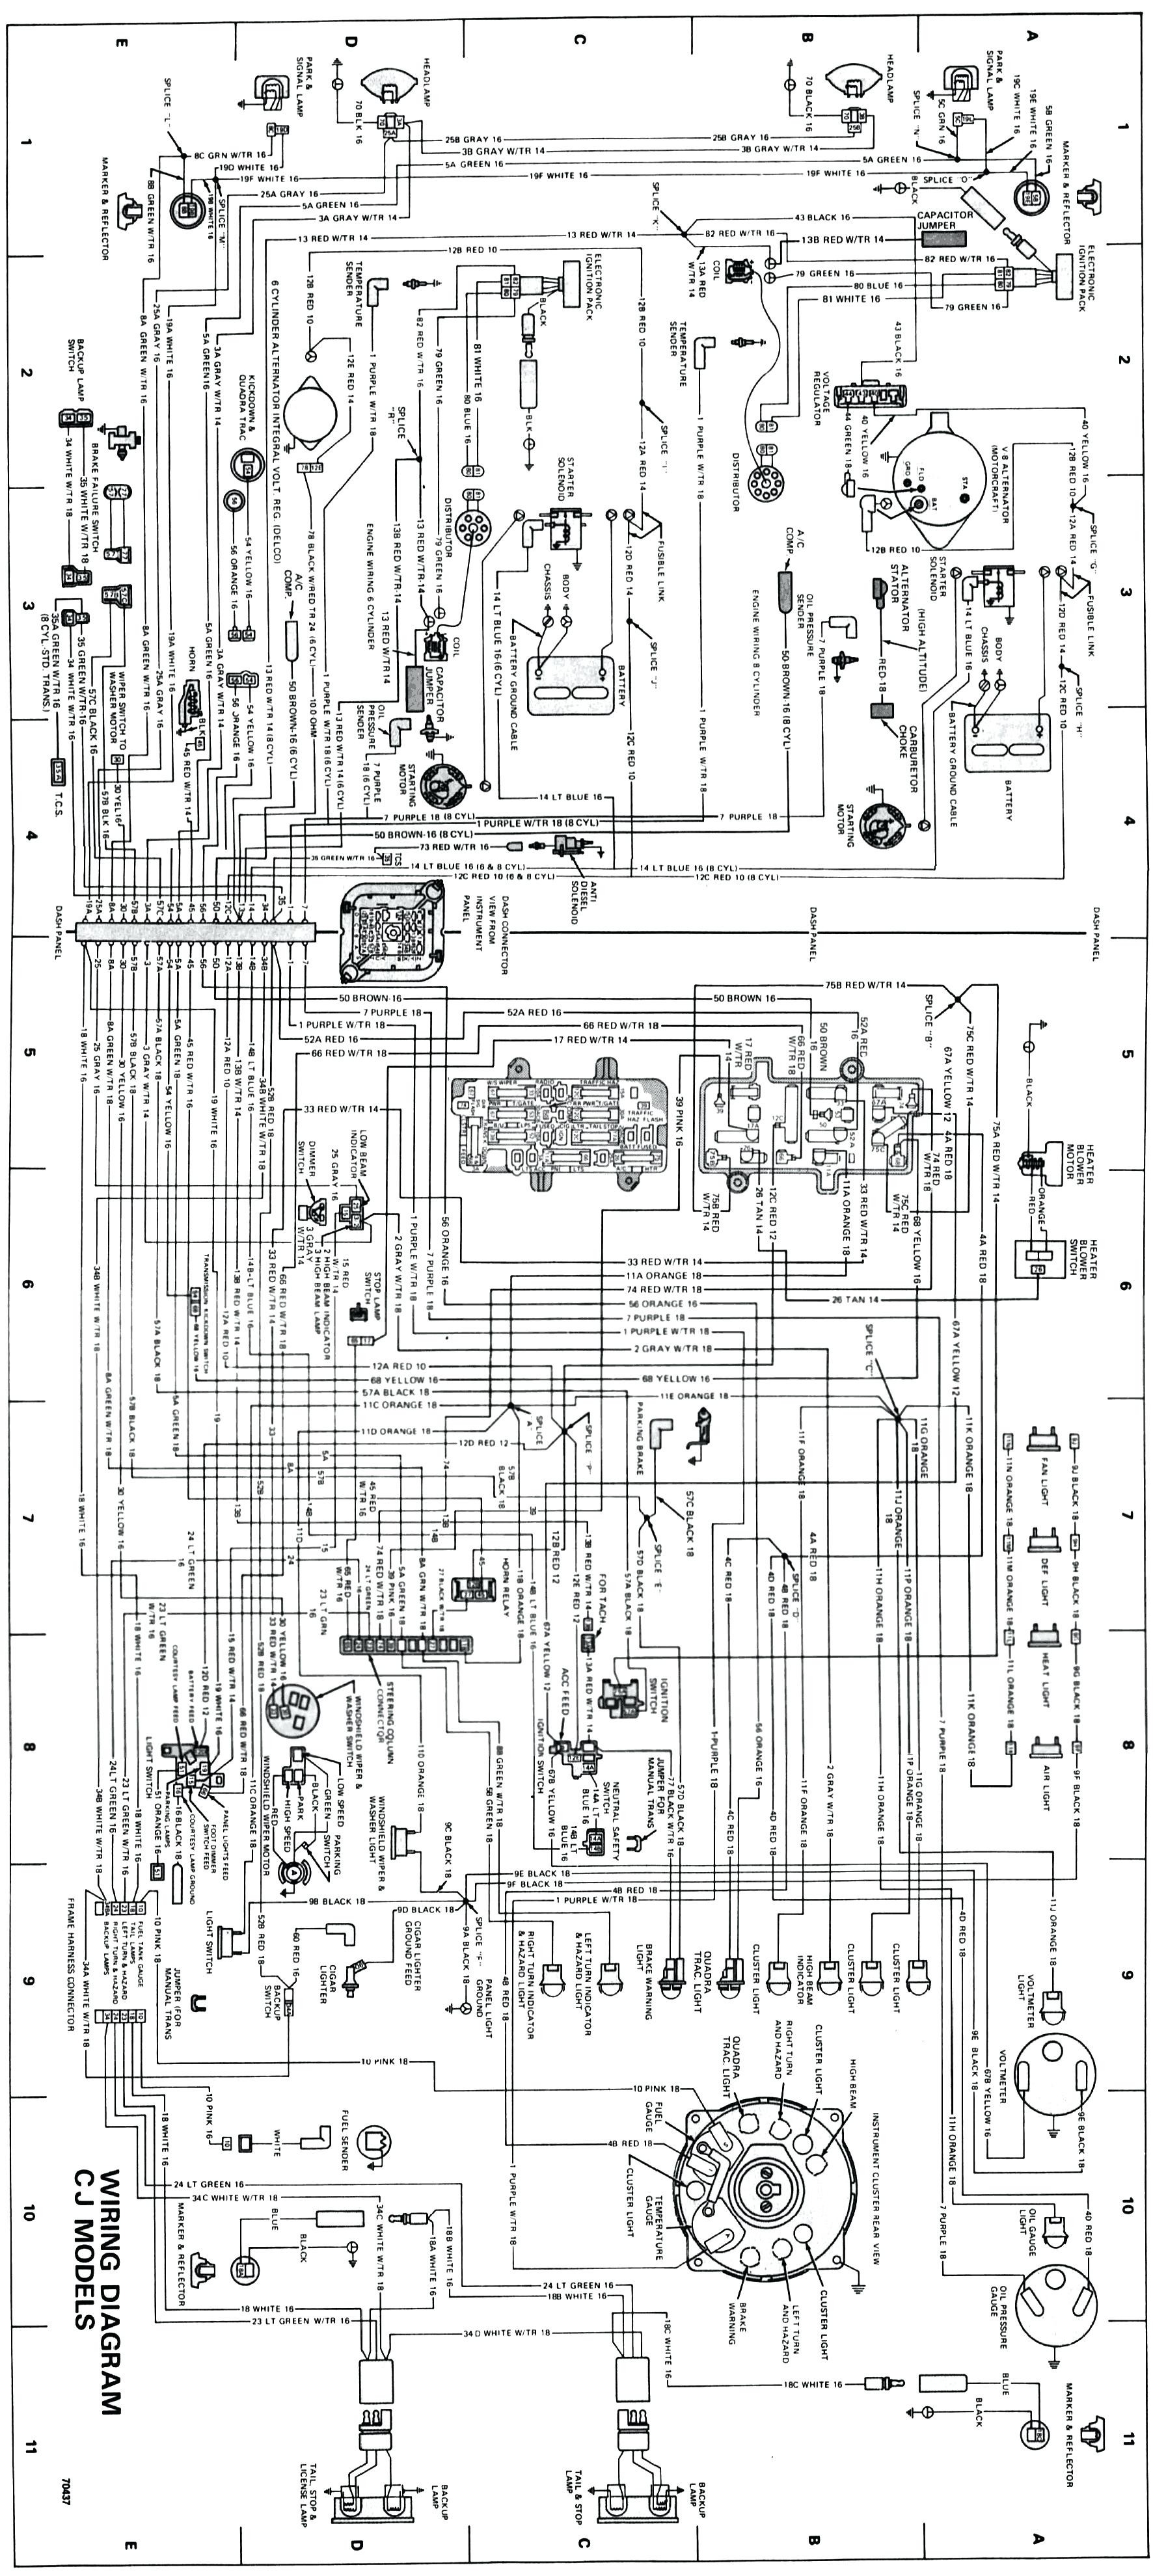 [DIAGRAM] 1978 Jeep Cj7 Steering Column Wiring Diagram FULL Version HD